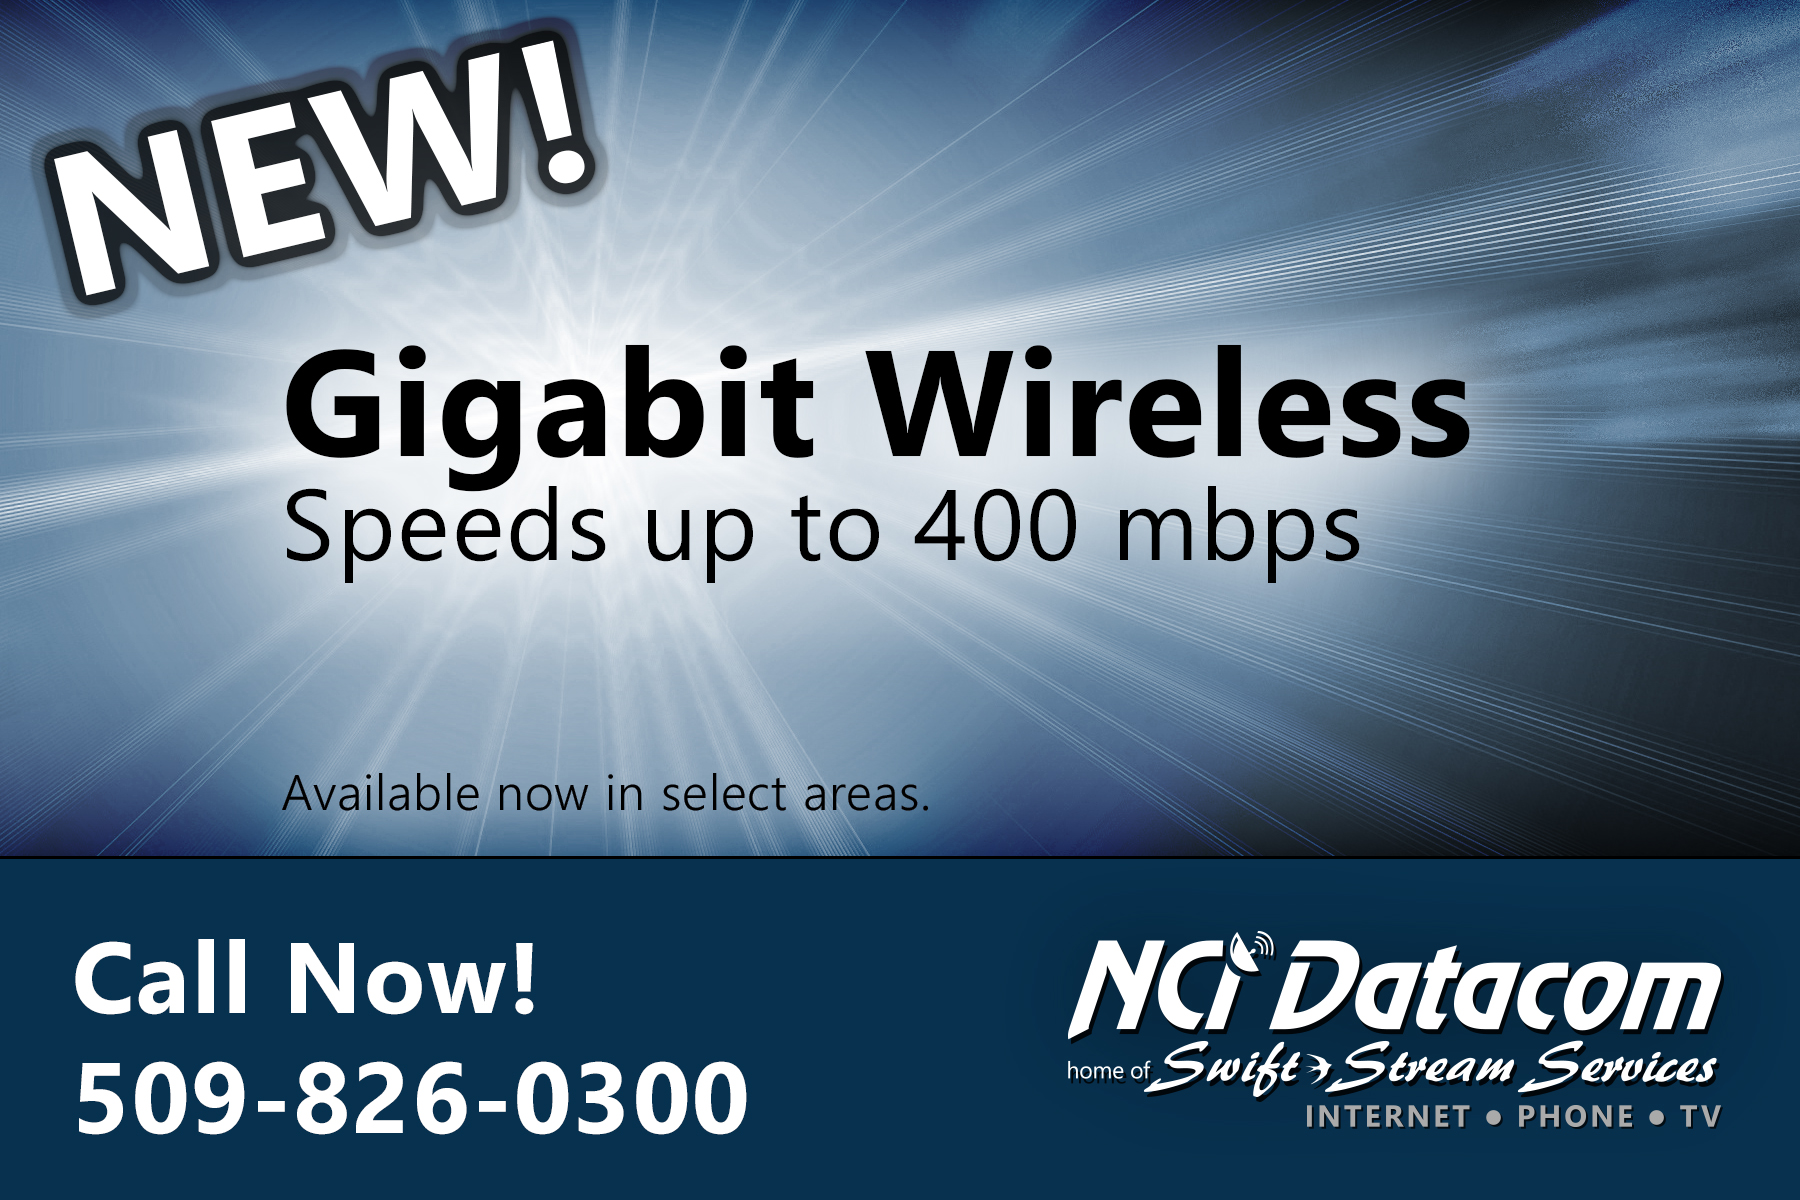 NEW! Gigabit Wireless